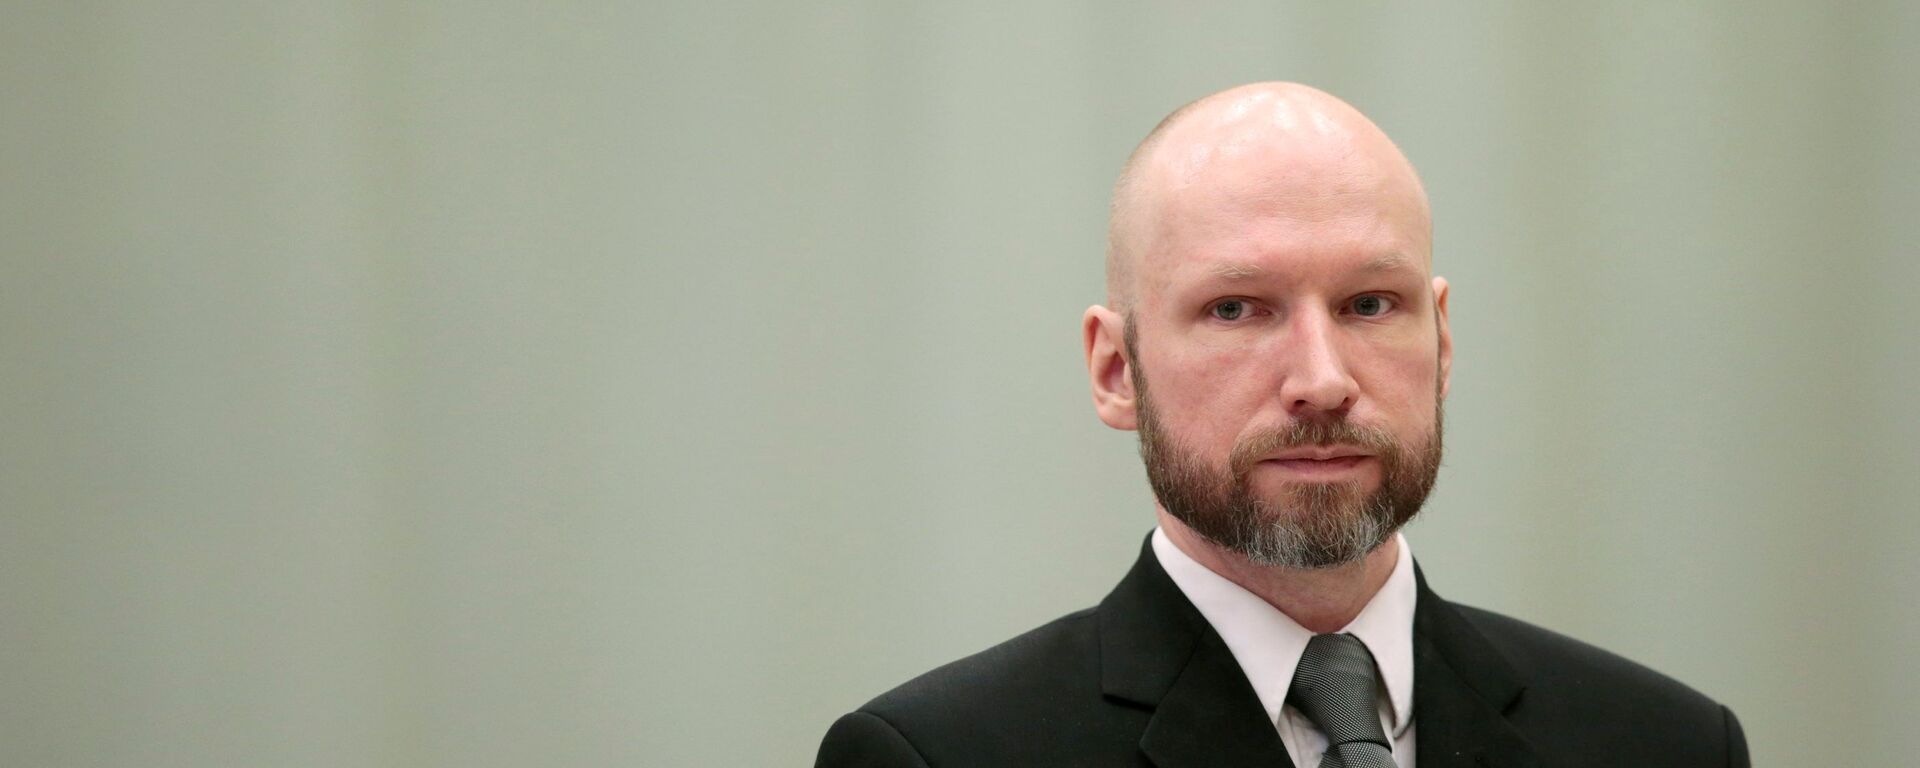  El radical Anders Breivik - Sputnik Mundo, 1920, 16.09.2020